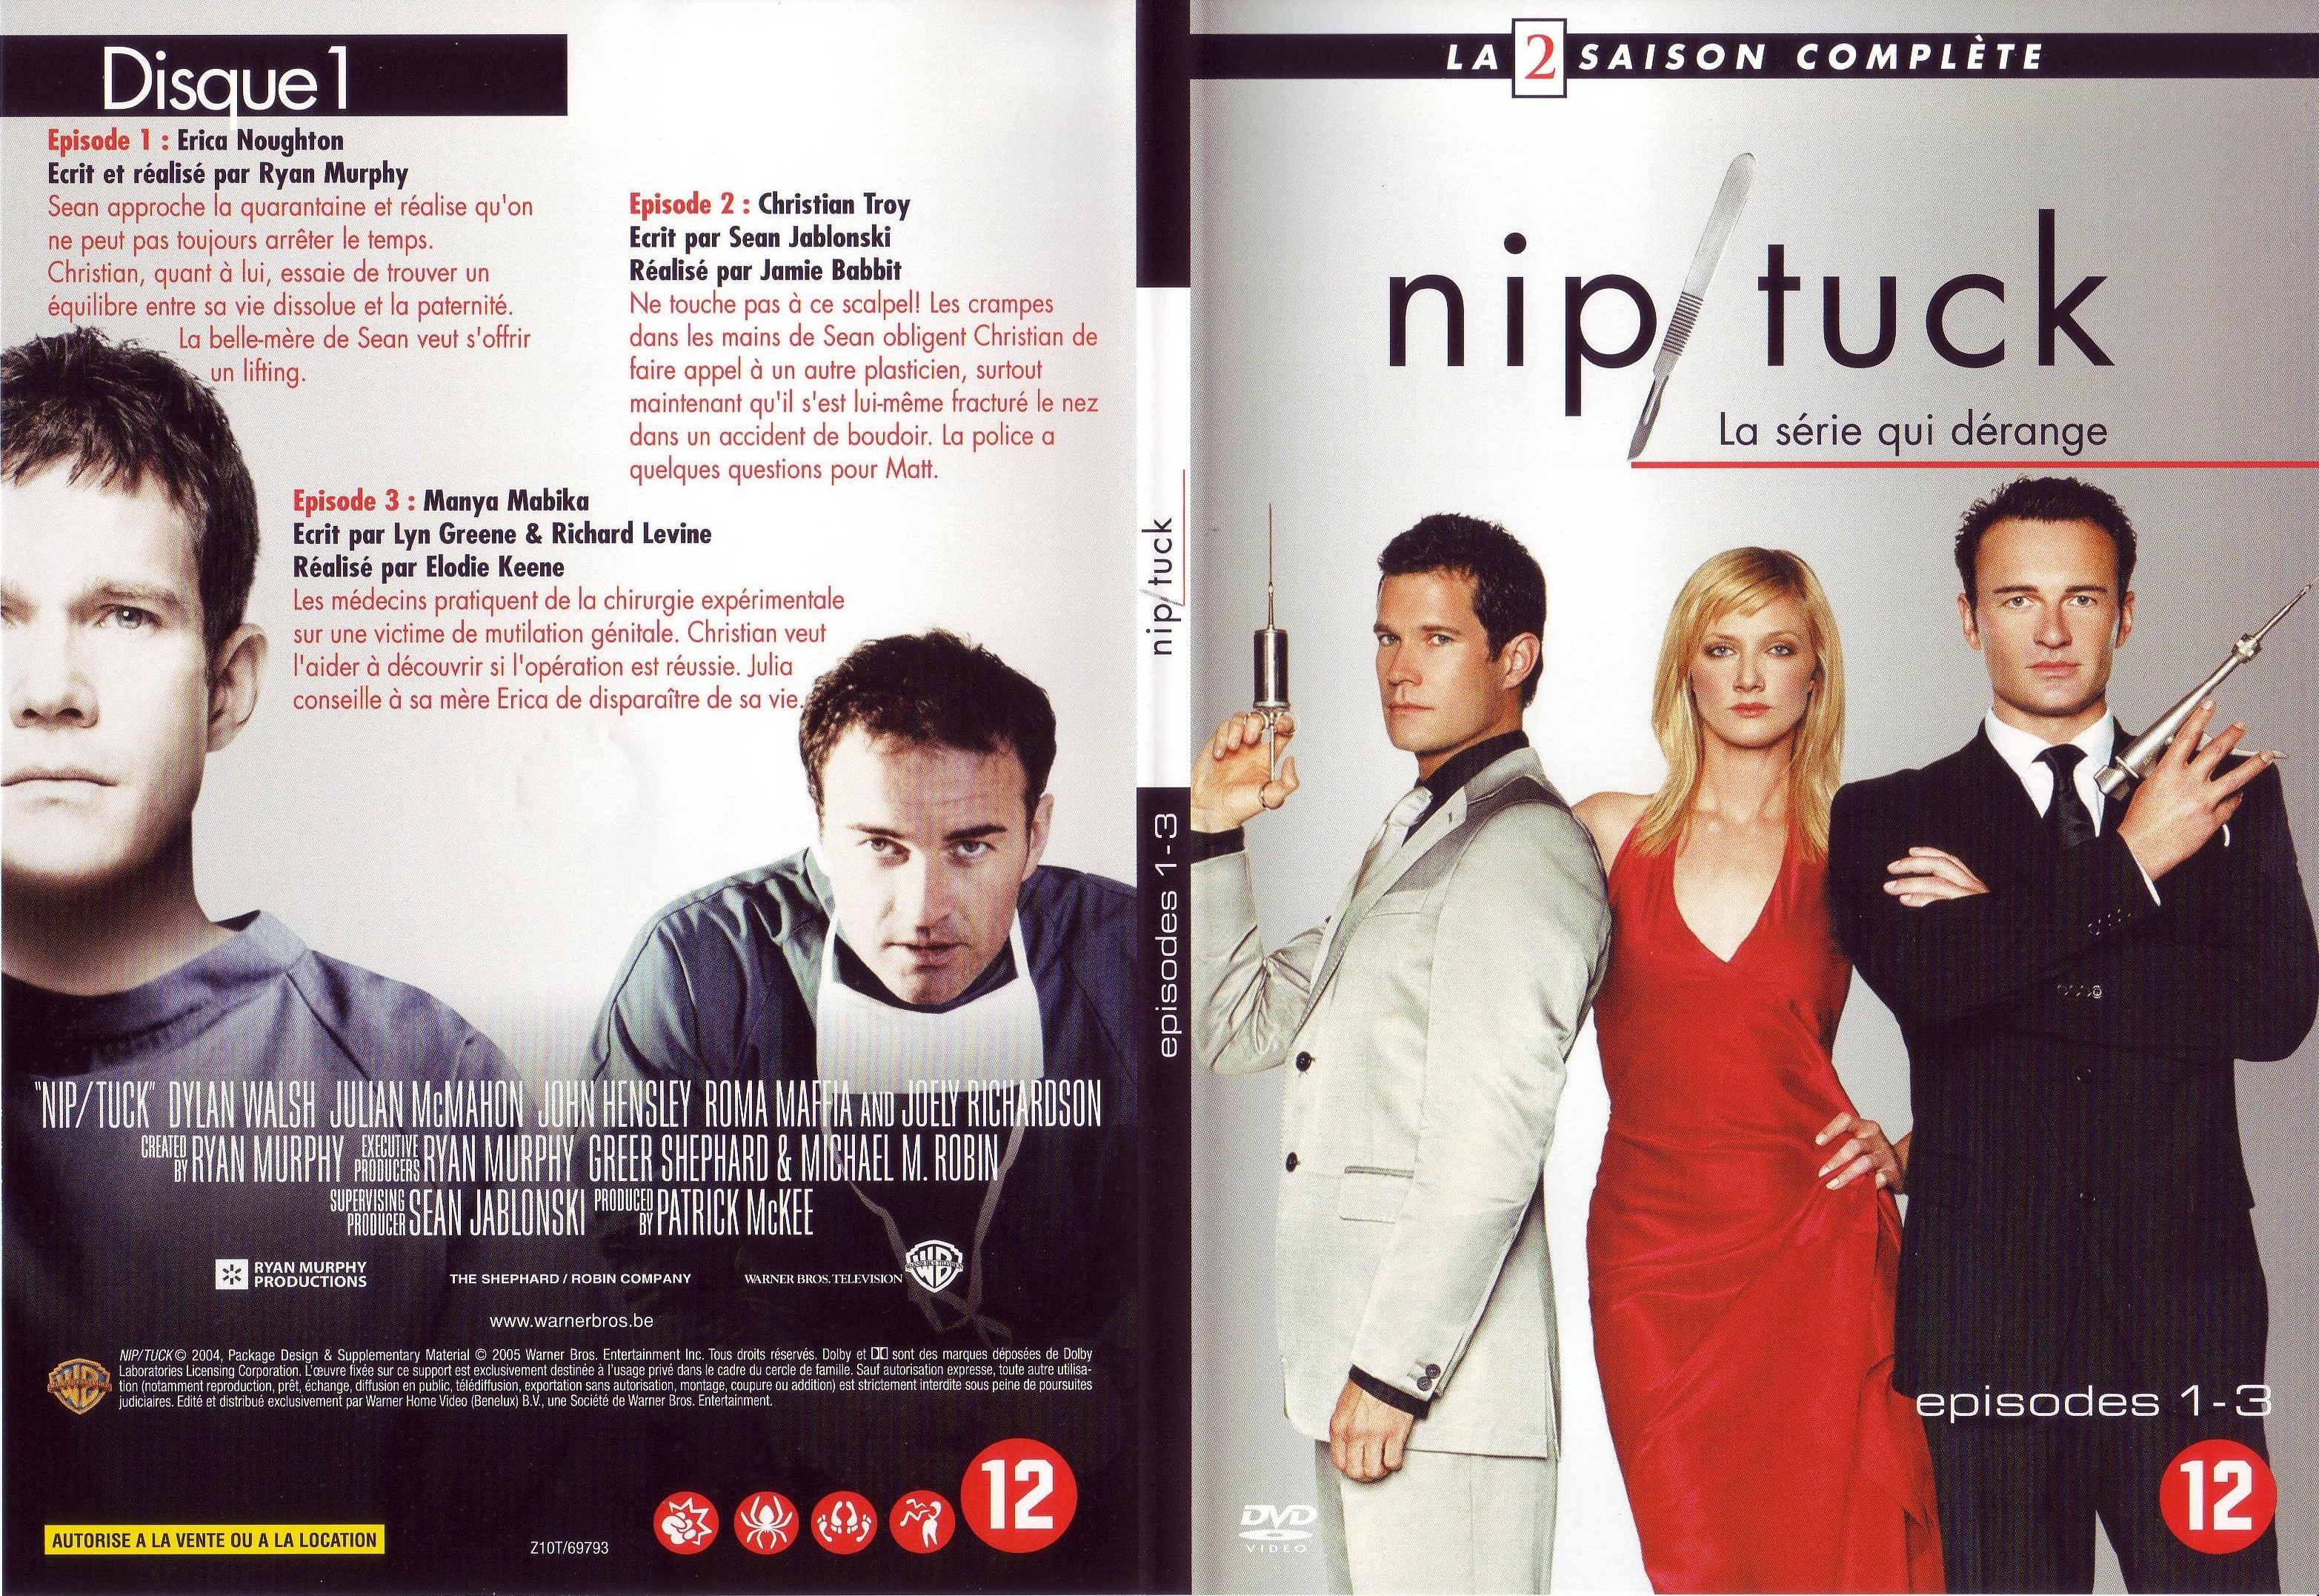 Jaquette DVD Nip-Tuck saison 2 DVD 1